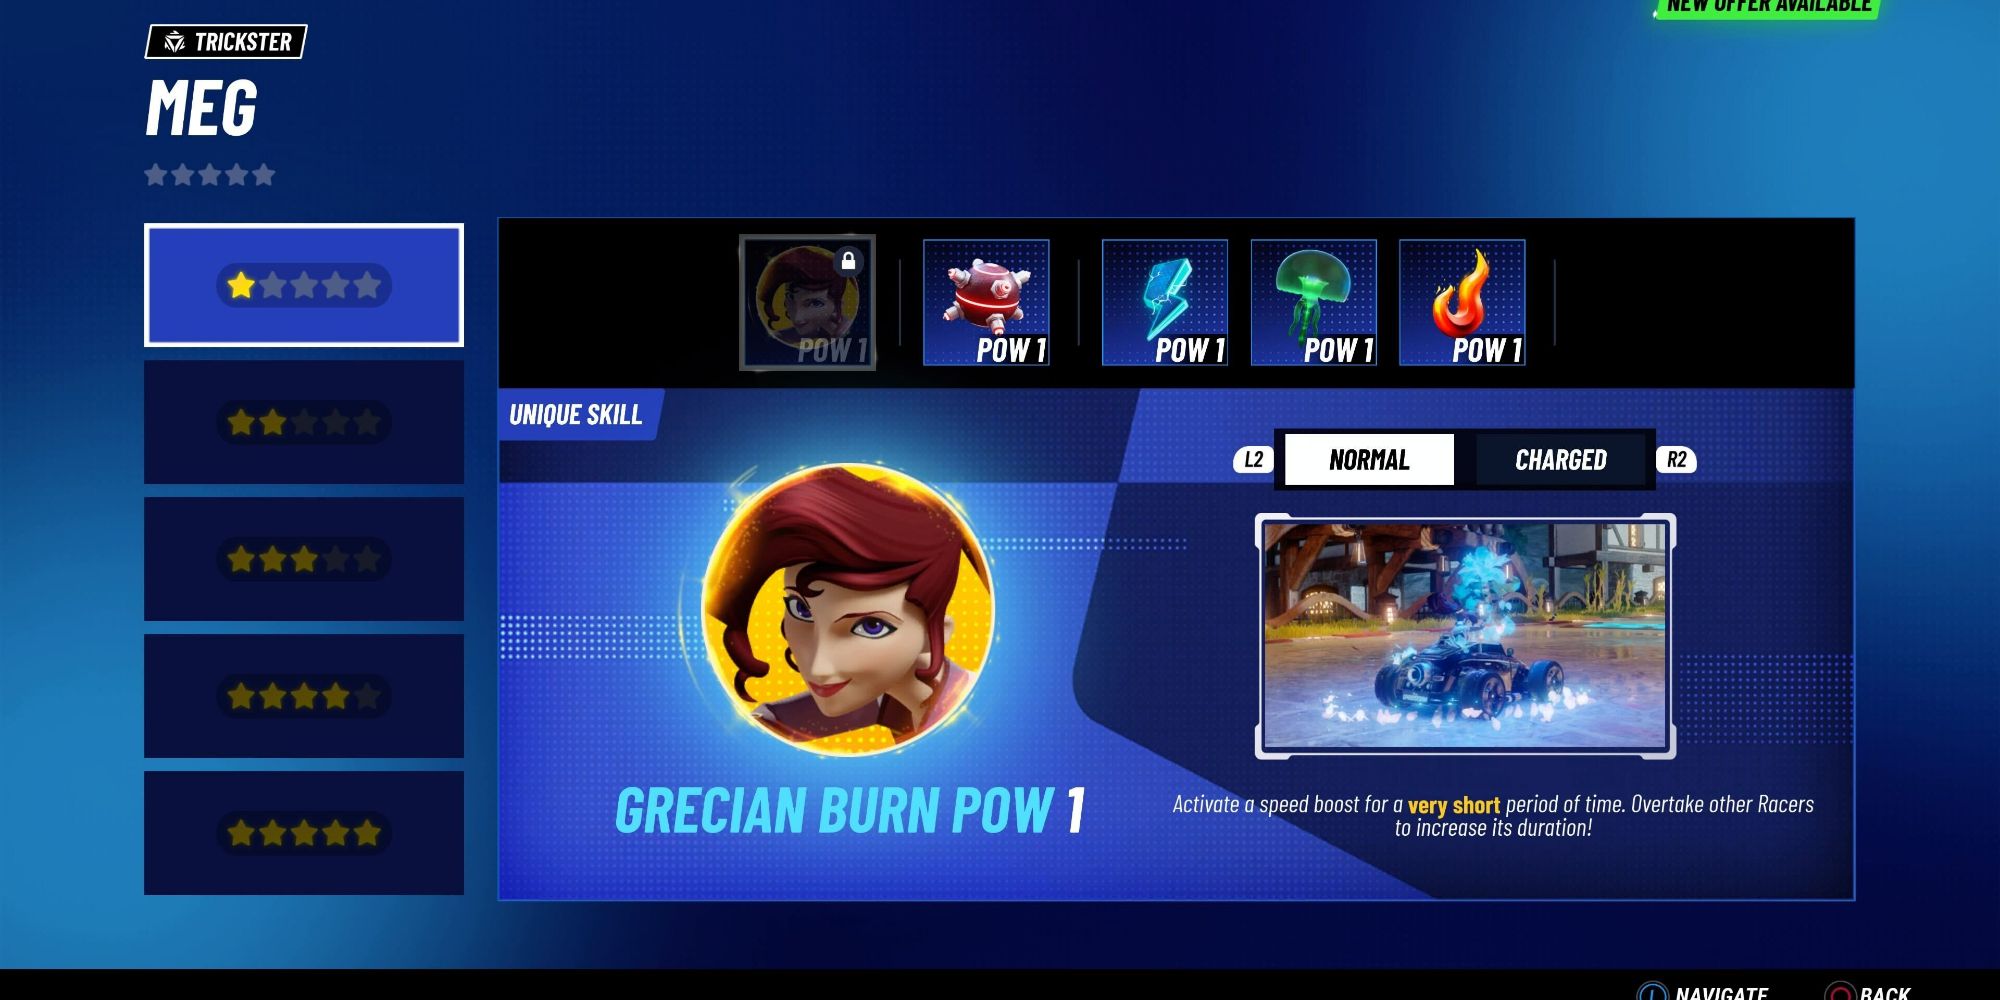 Meg's unique skill in Disney Speedstorm called Grecian Burn